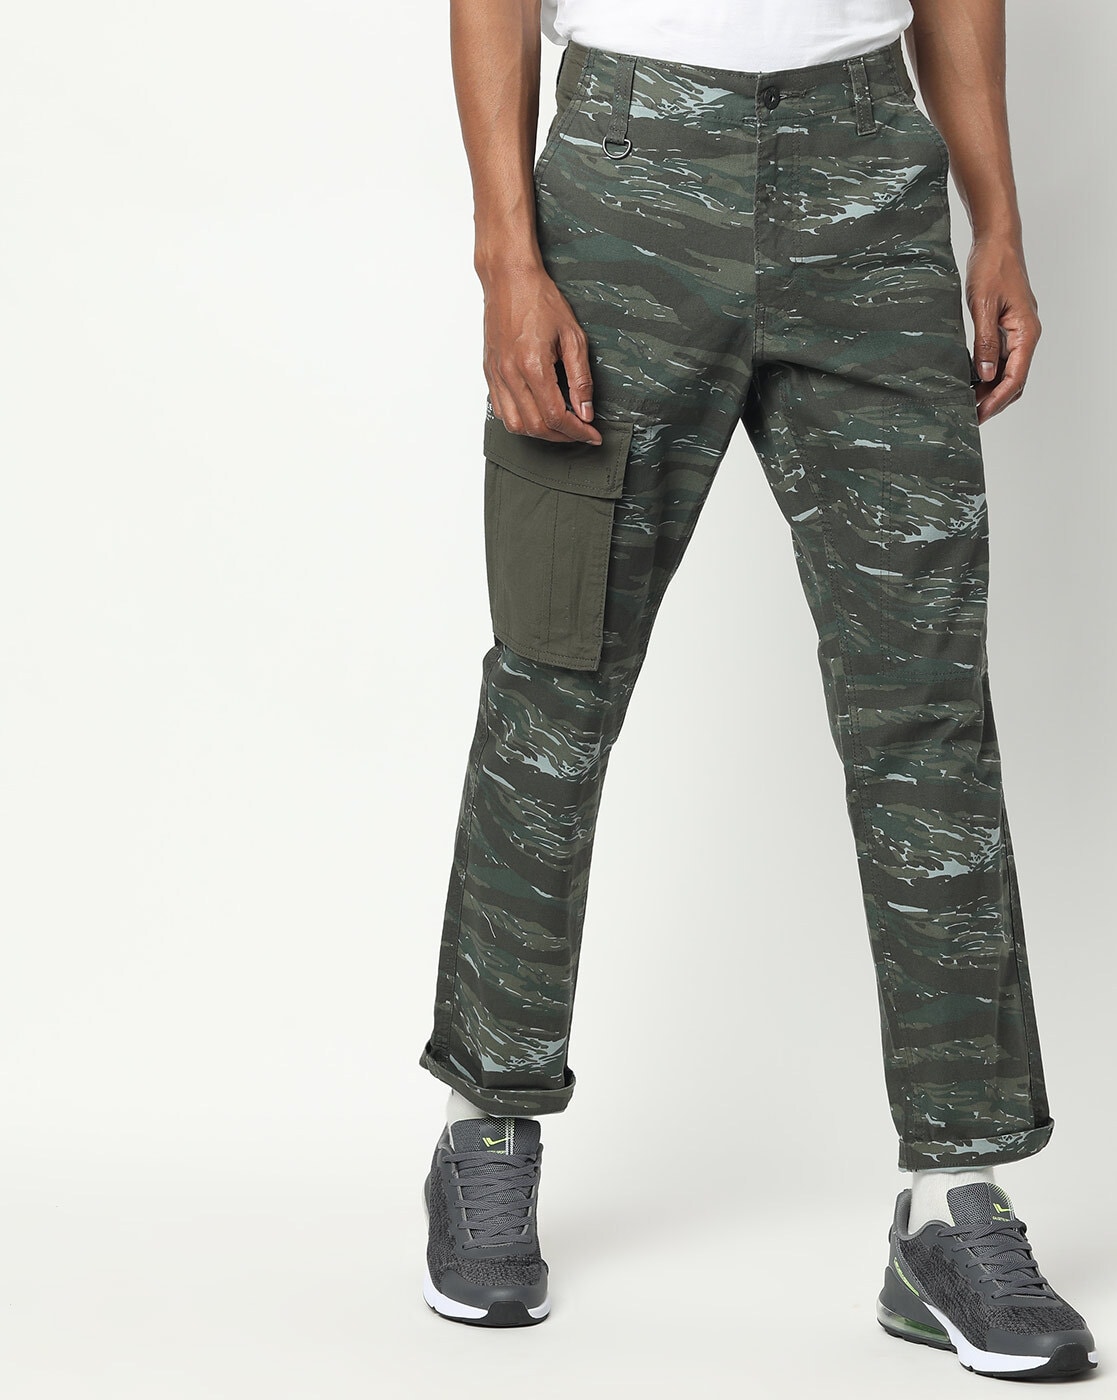 Levis Camouflage Cargo Pants Mens 30x30 Green  eBay